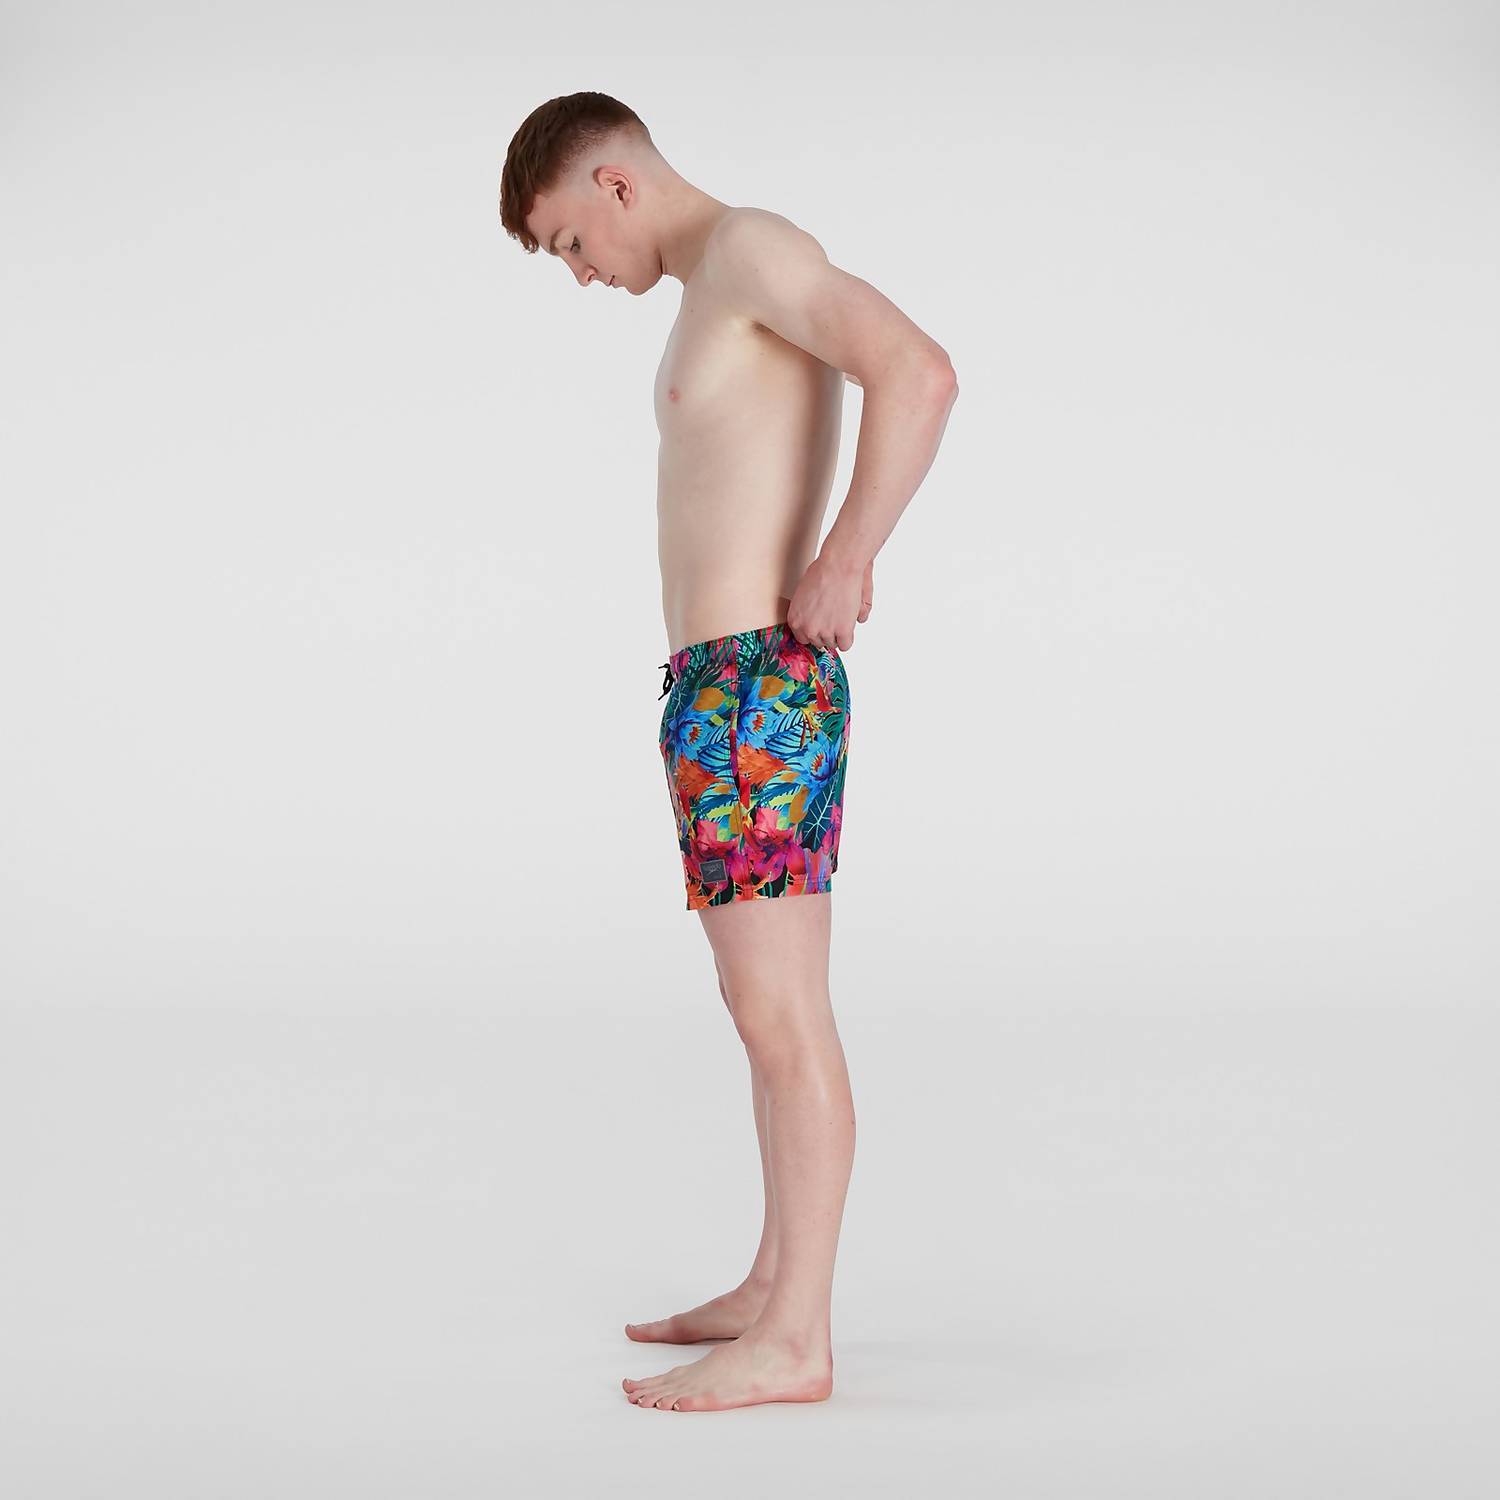 Hommes Short De Bain Homme Digital Printed Leisure 35 Cm Rose/Bleu Shorts De Bain Speedo – 2